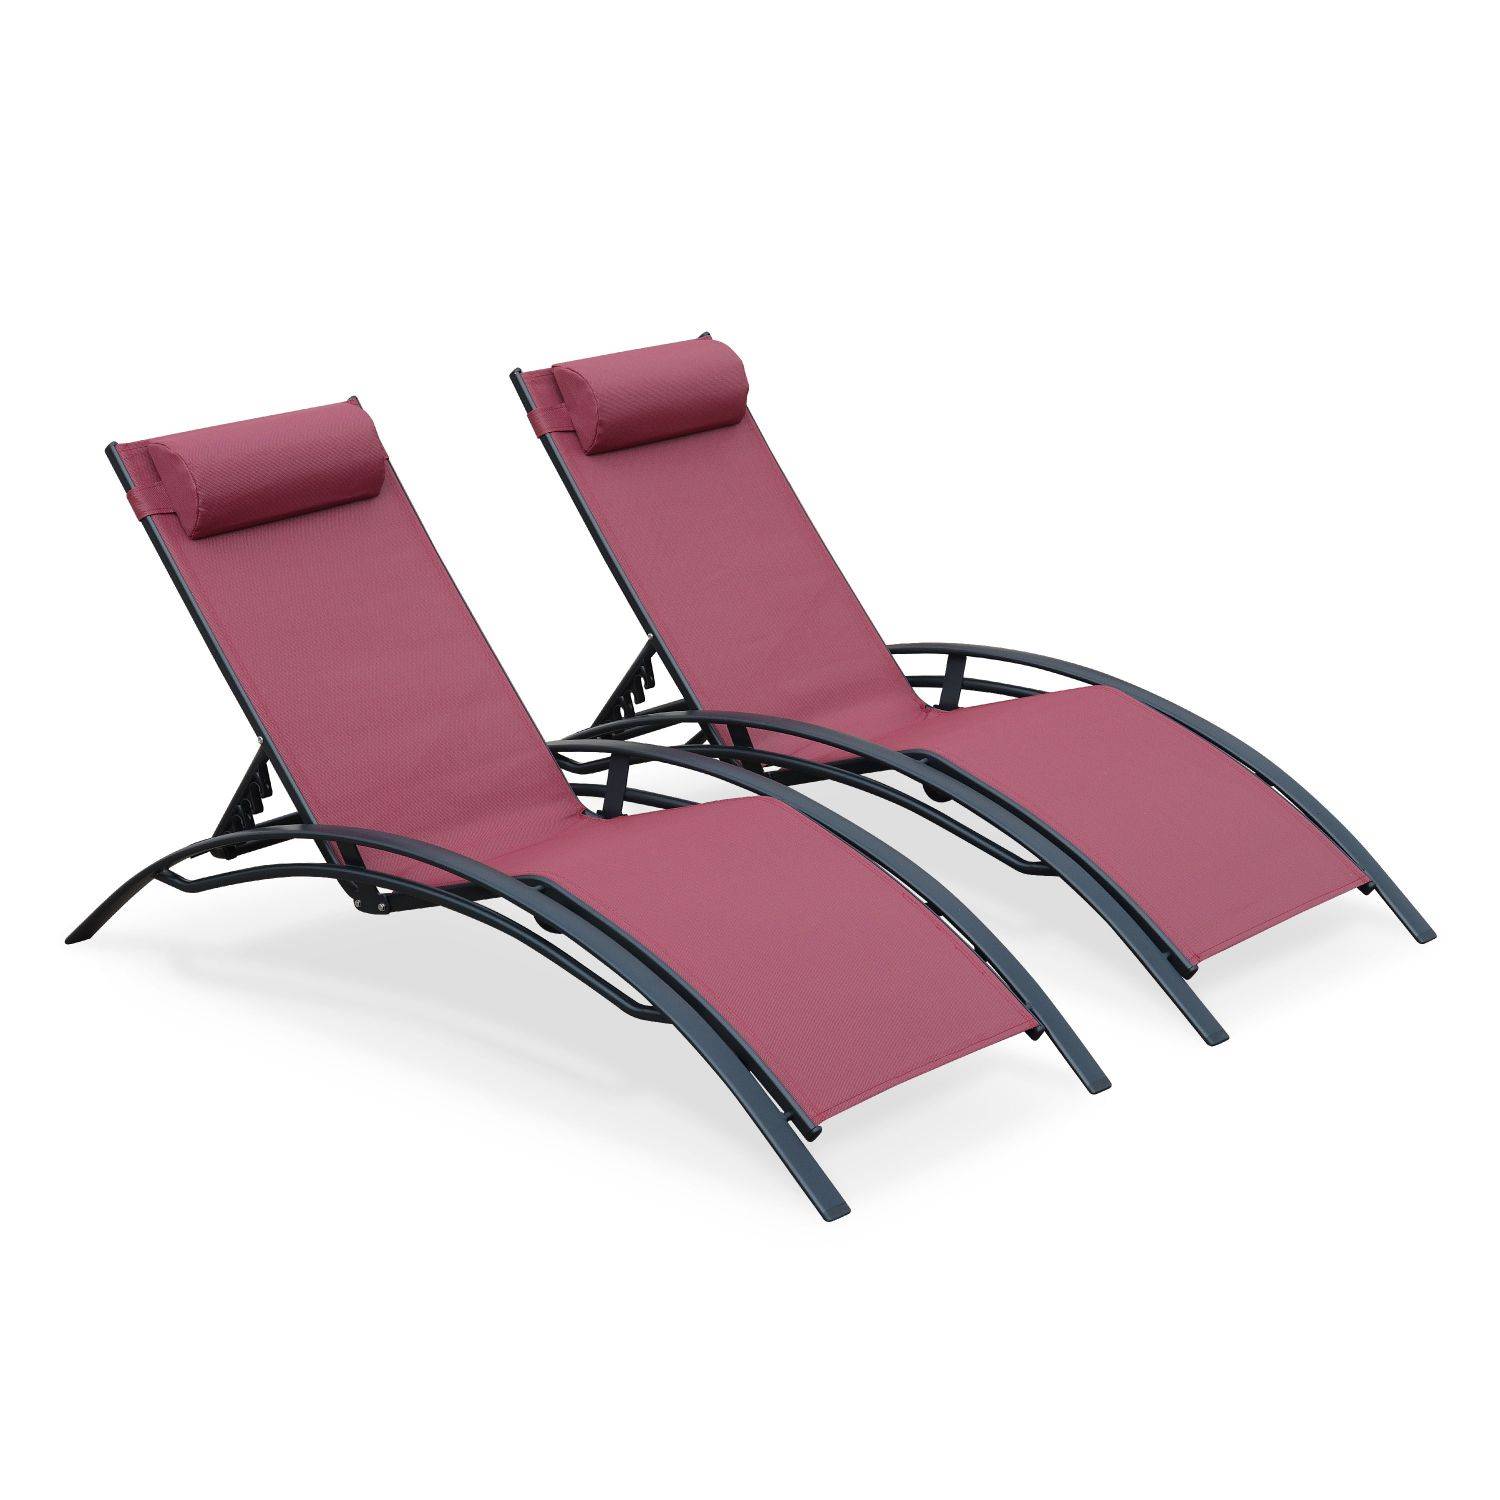 Duo aus Sonnenliegen aus Aluminium - Louisa Bordeaux - Liegestühle aus Aluminium und Textilene Photo1